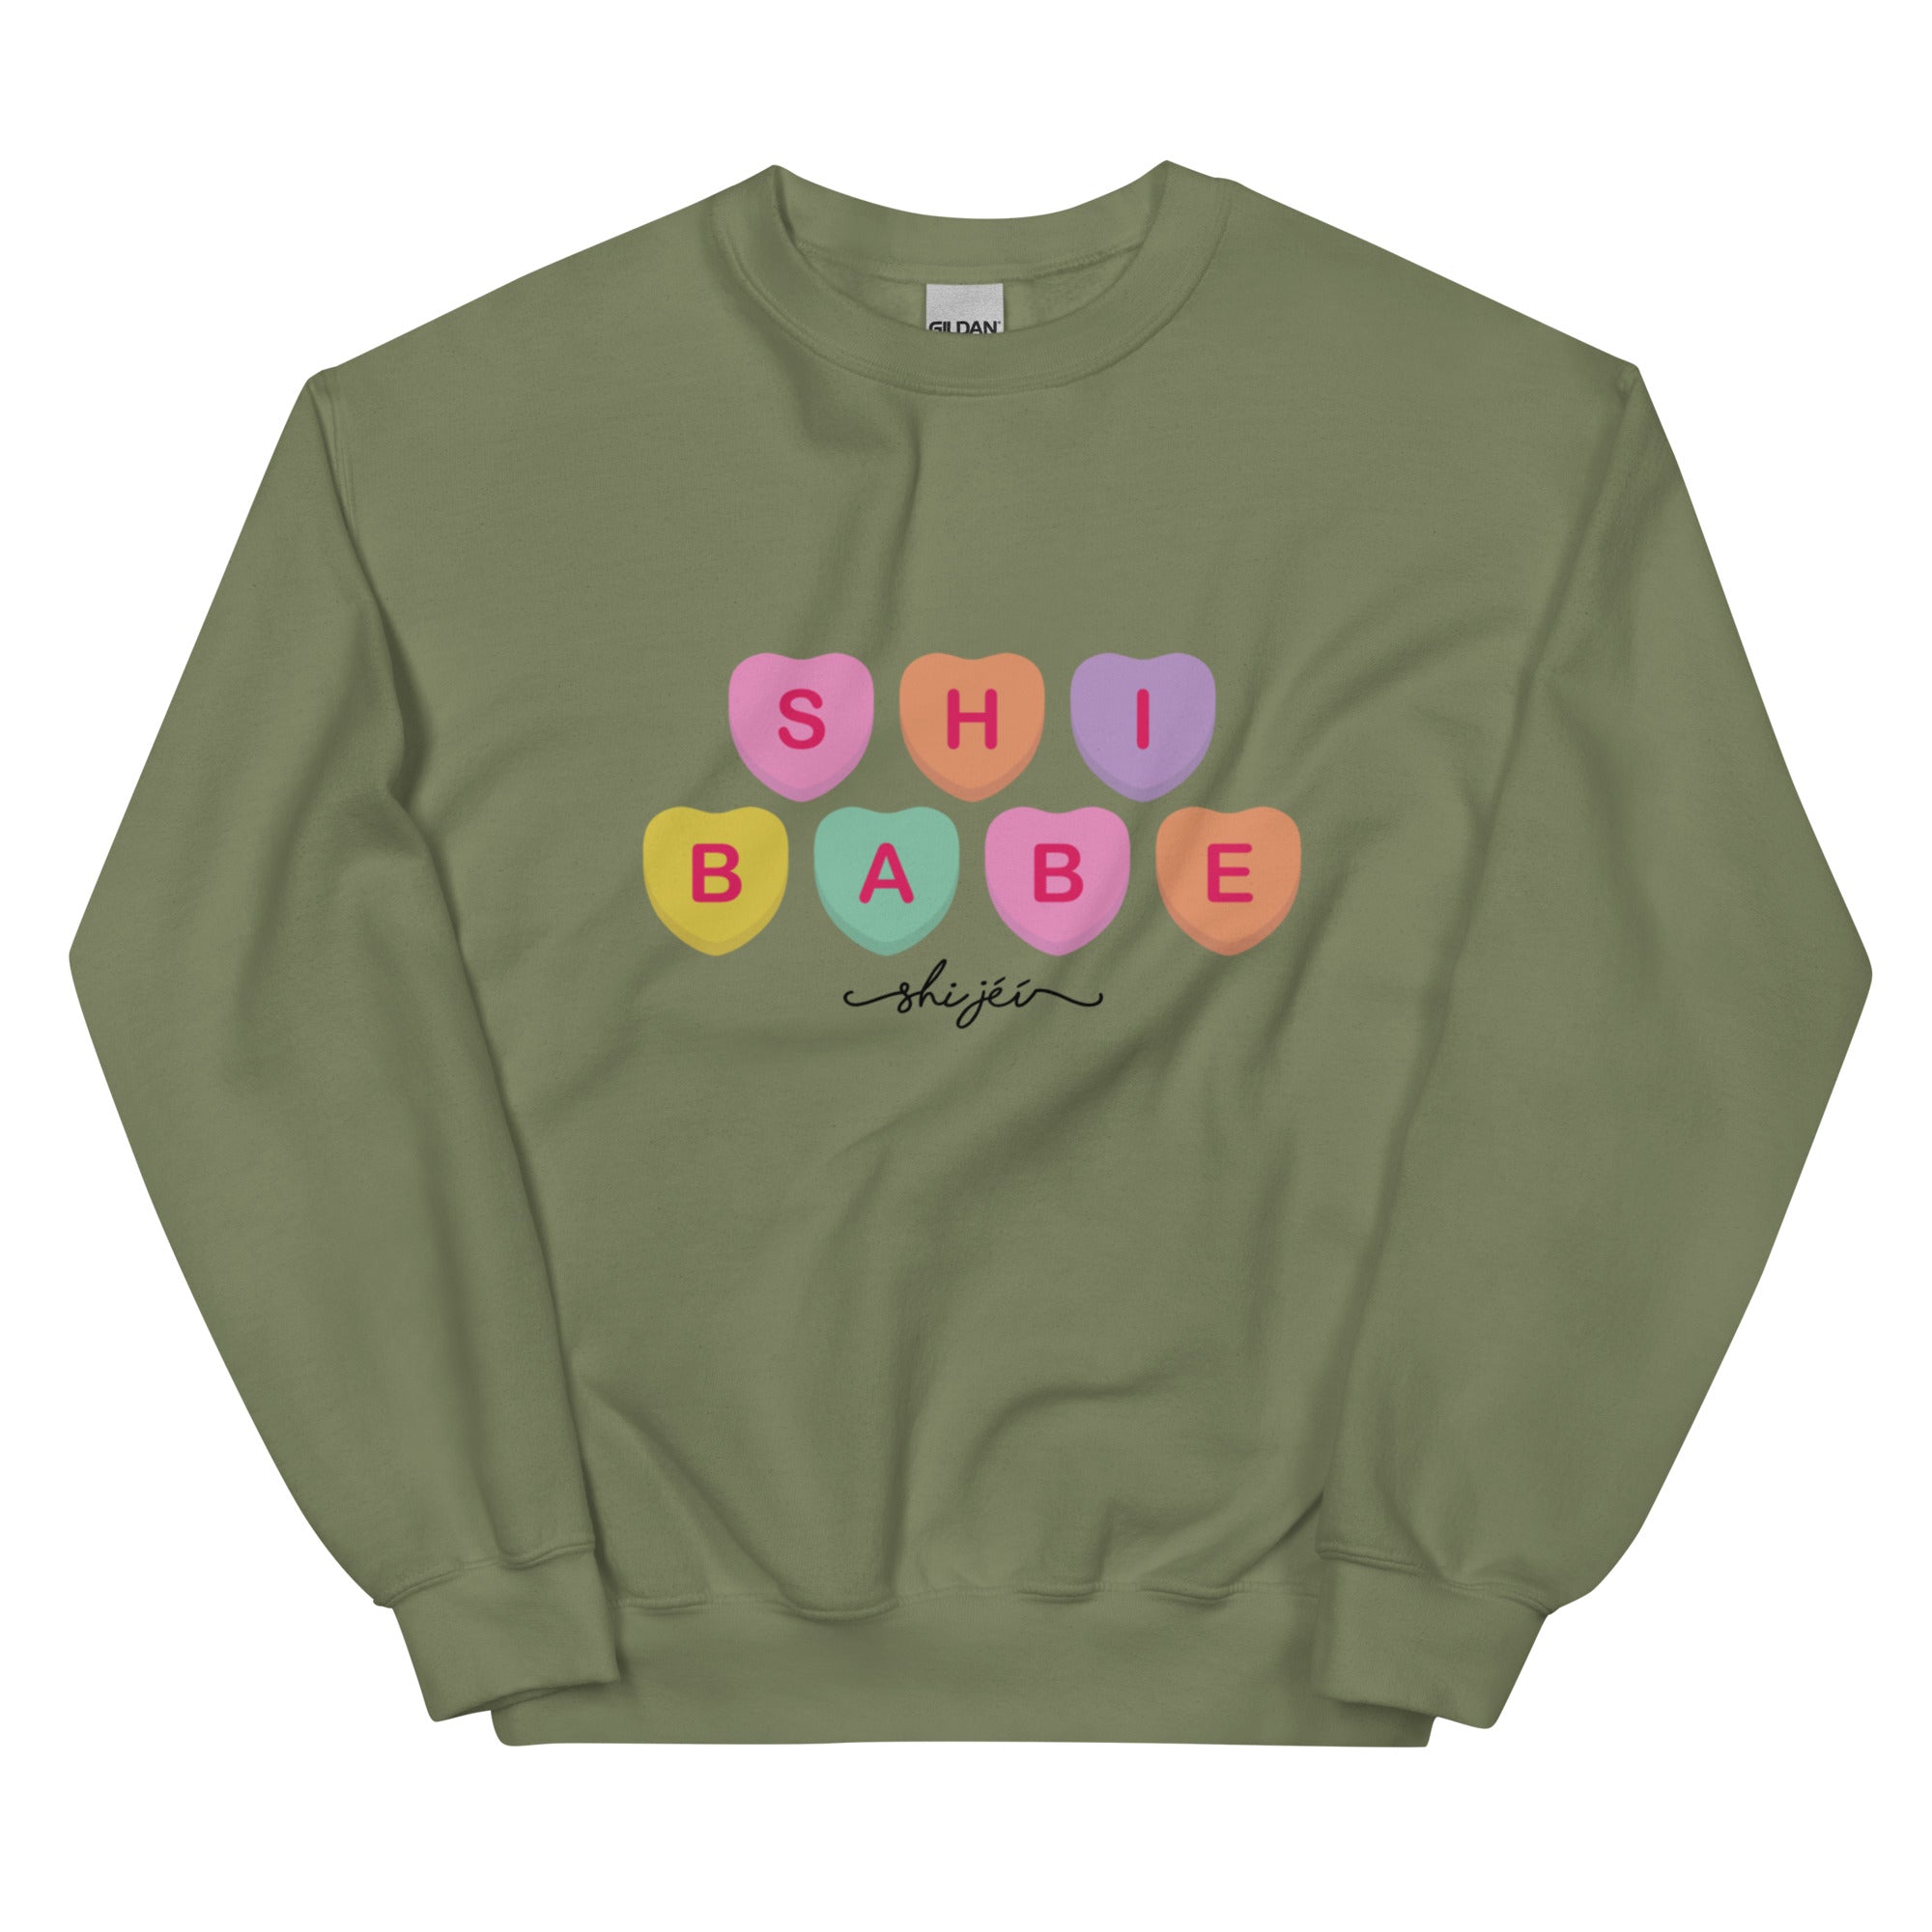 Shi Babe Sweatshirt